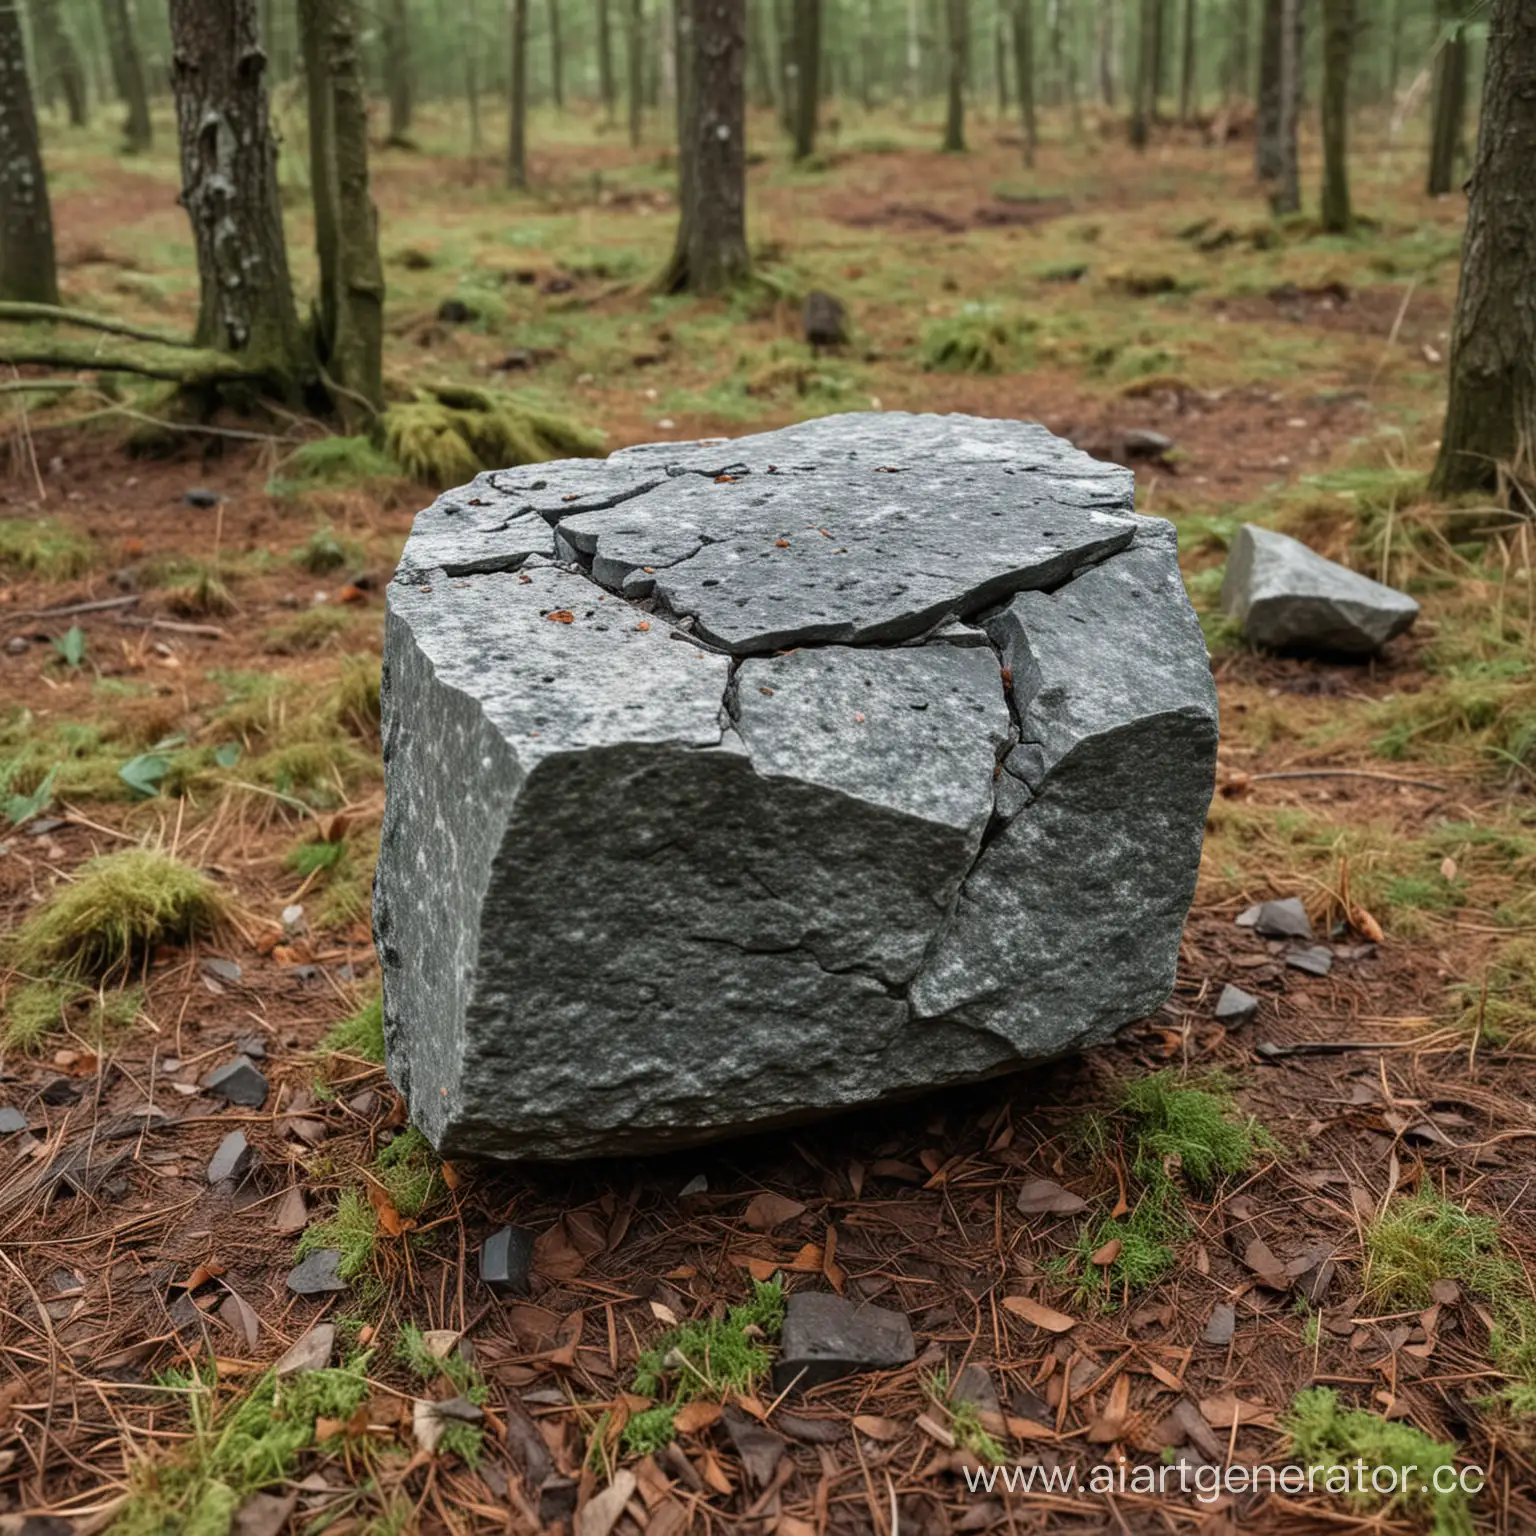 камень разбился от удара кулака в лесу
стоит